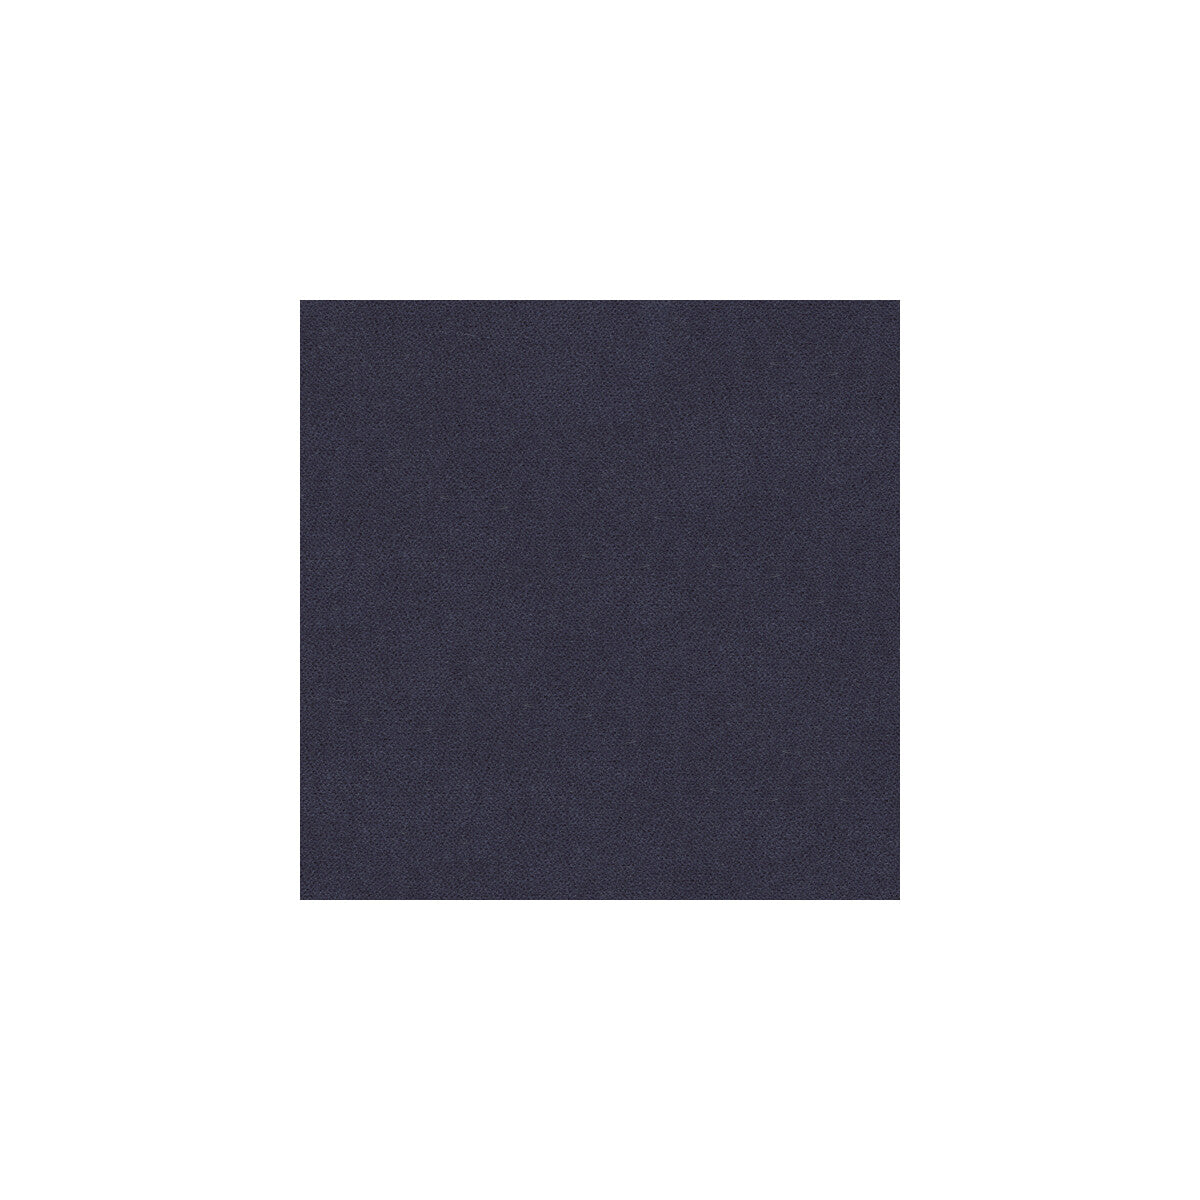 Kravet Smart fabric in 32565-50 color - pattern 32565.50.0 - by Kravet Smart in the The Complete Velvet collection